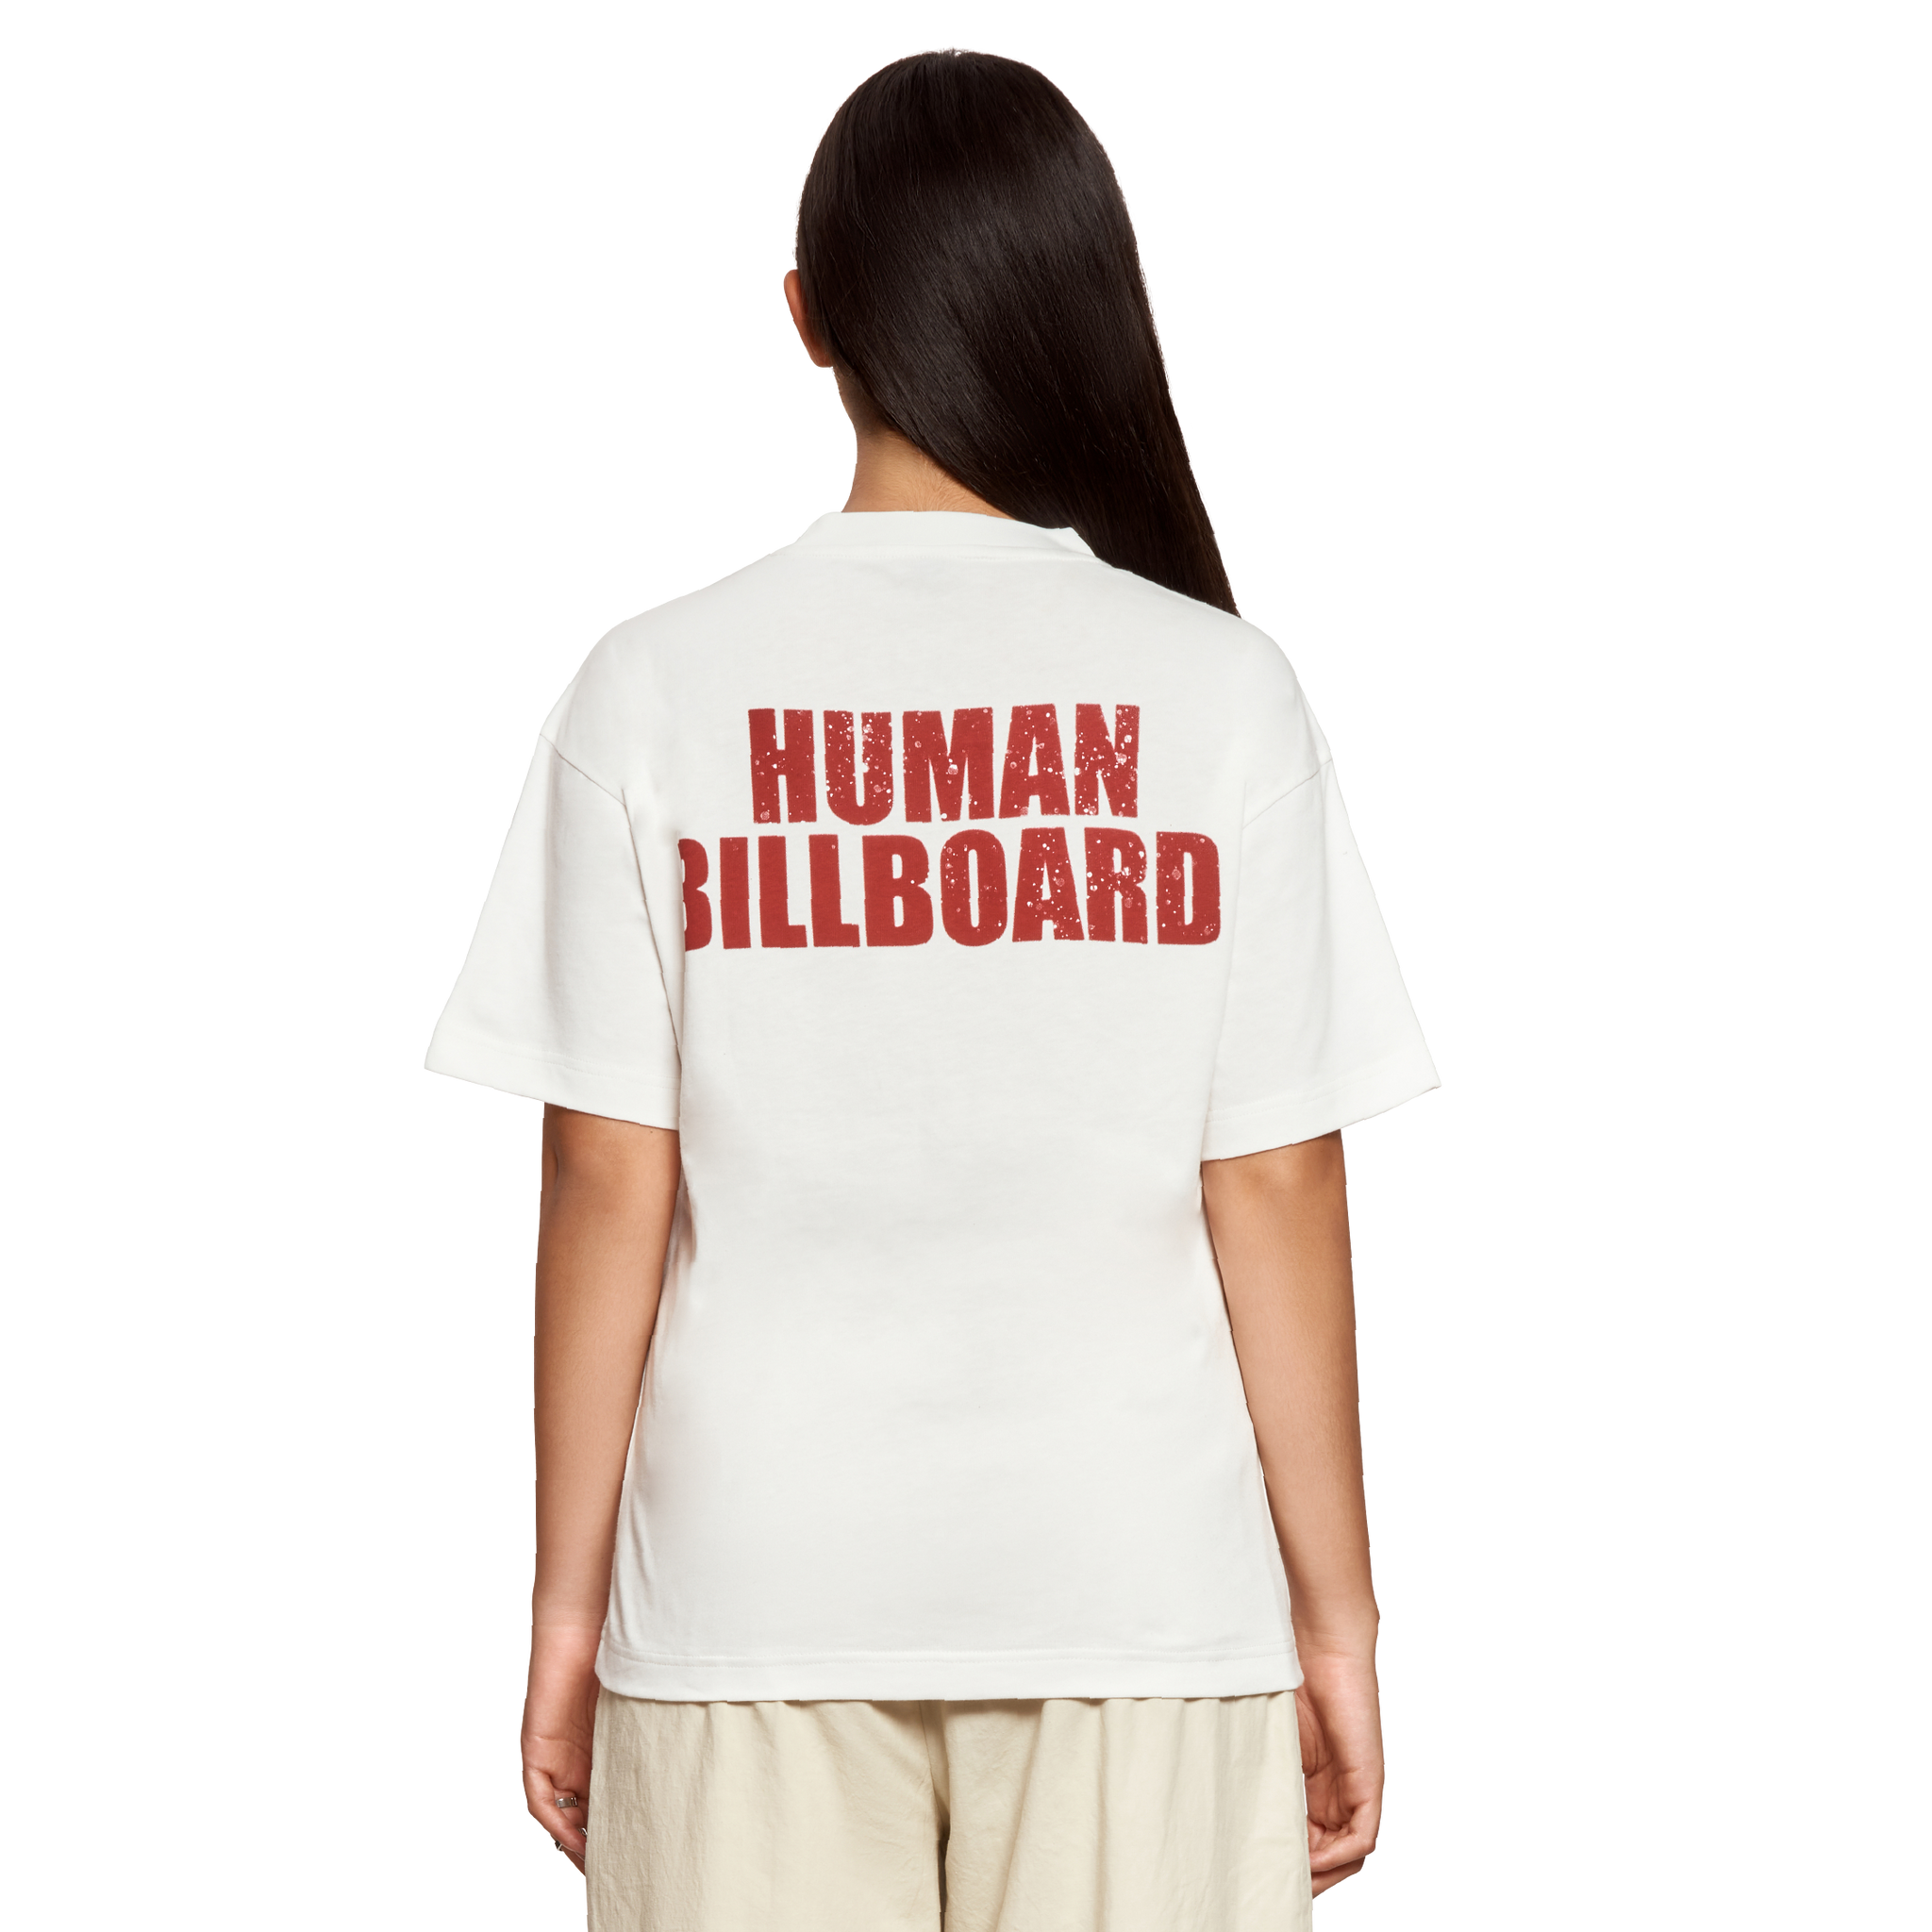 HUMMAN BILLbOARD T-SHIRT- WHITE